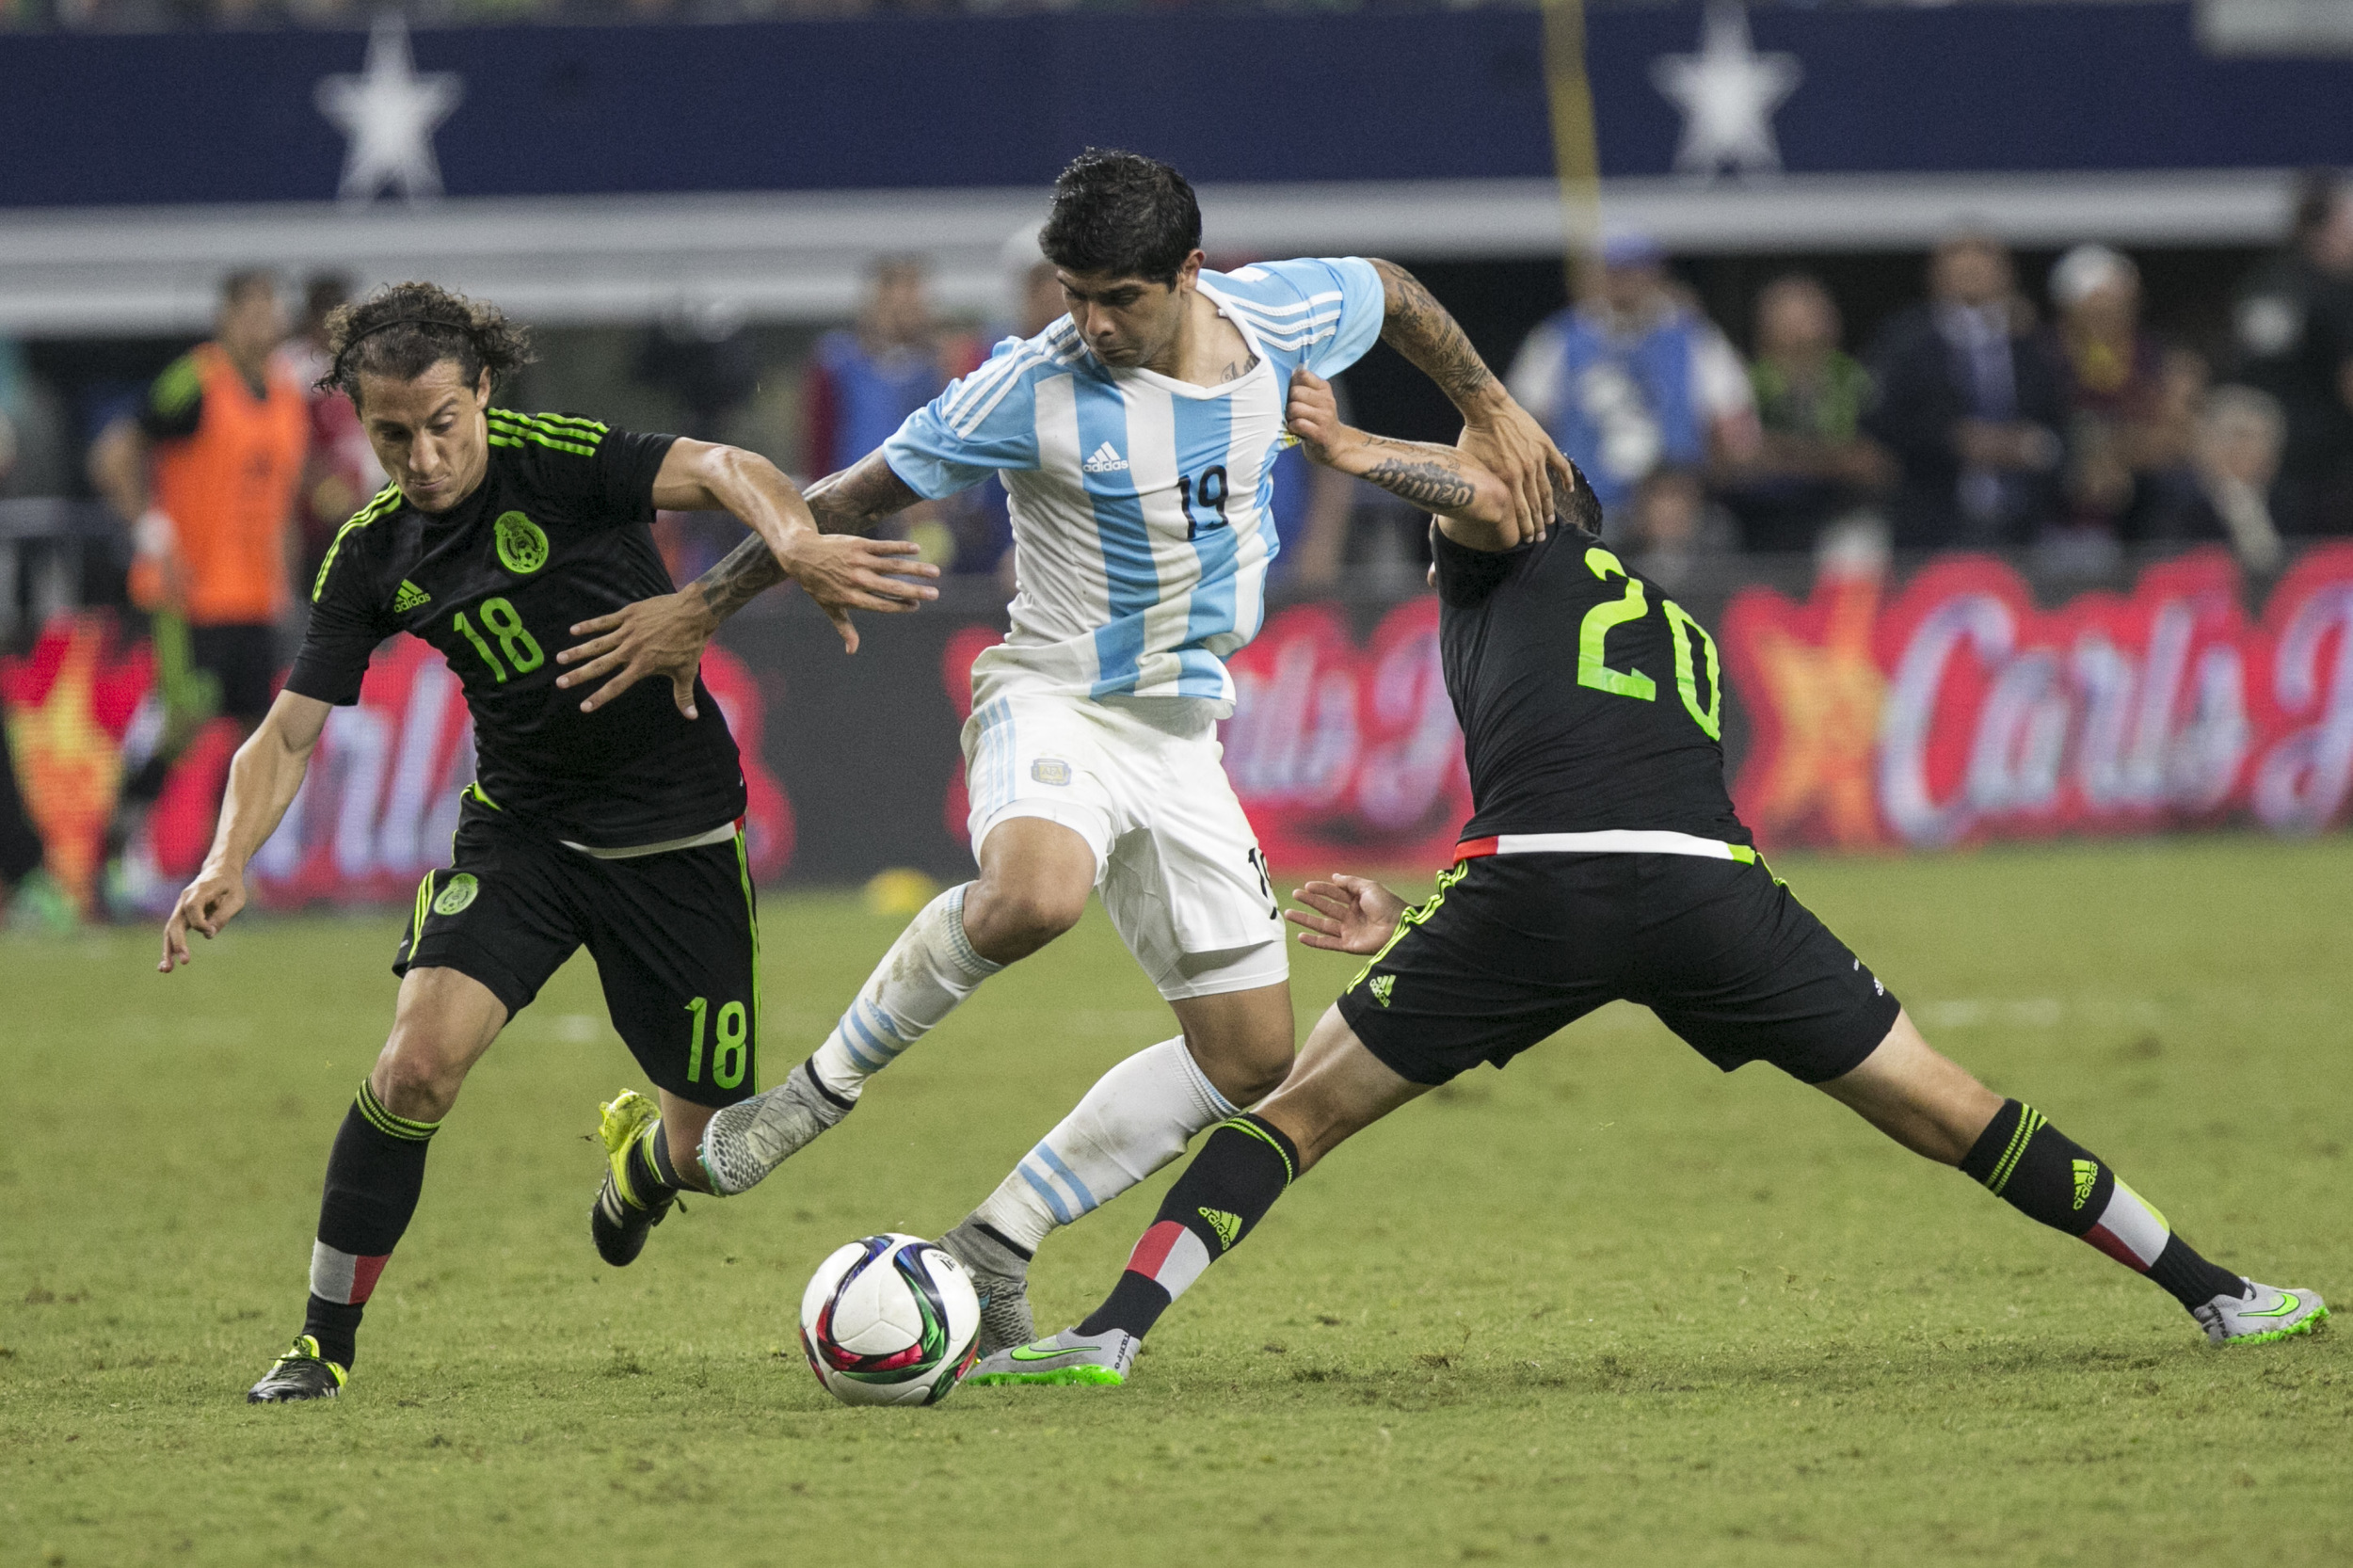  Mexico vs. Argentina National Soccer on Sep. 8, 2015, in Arlington, TX. 